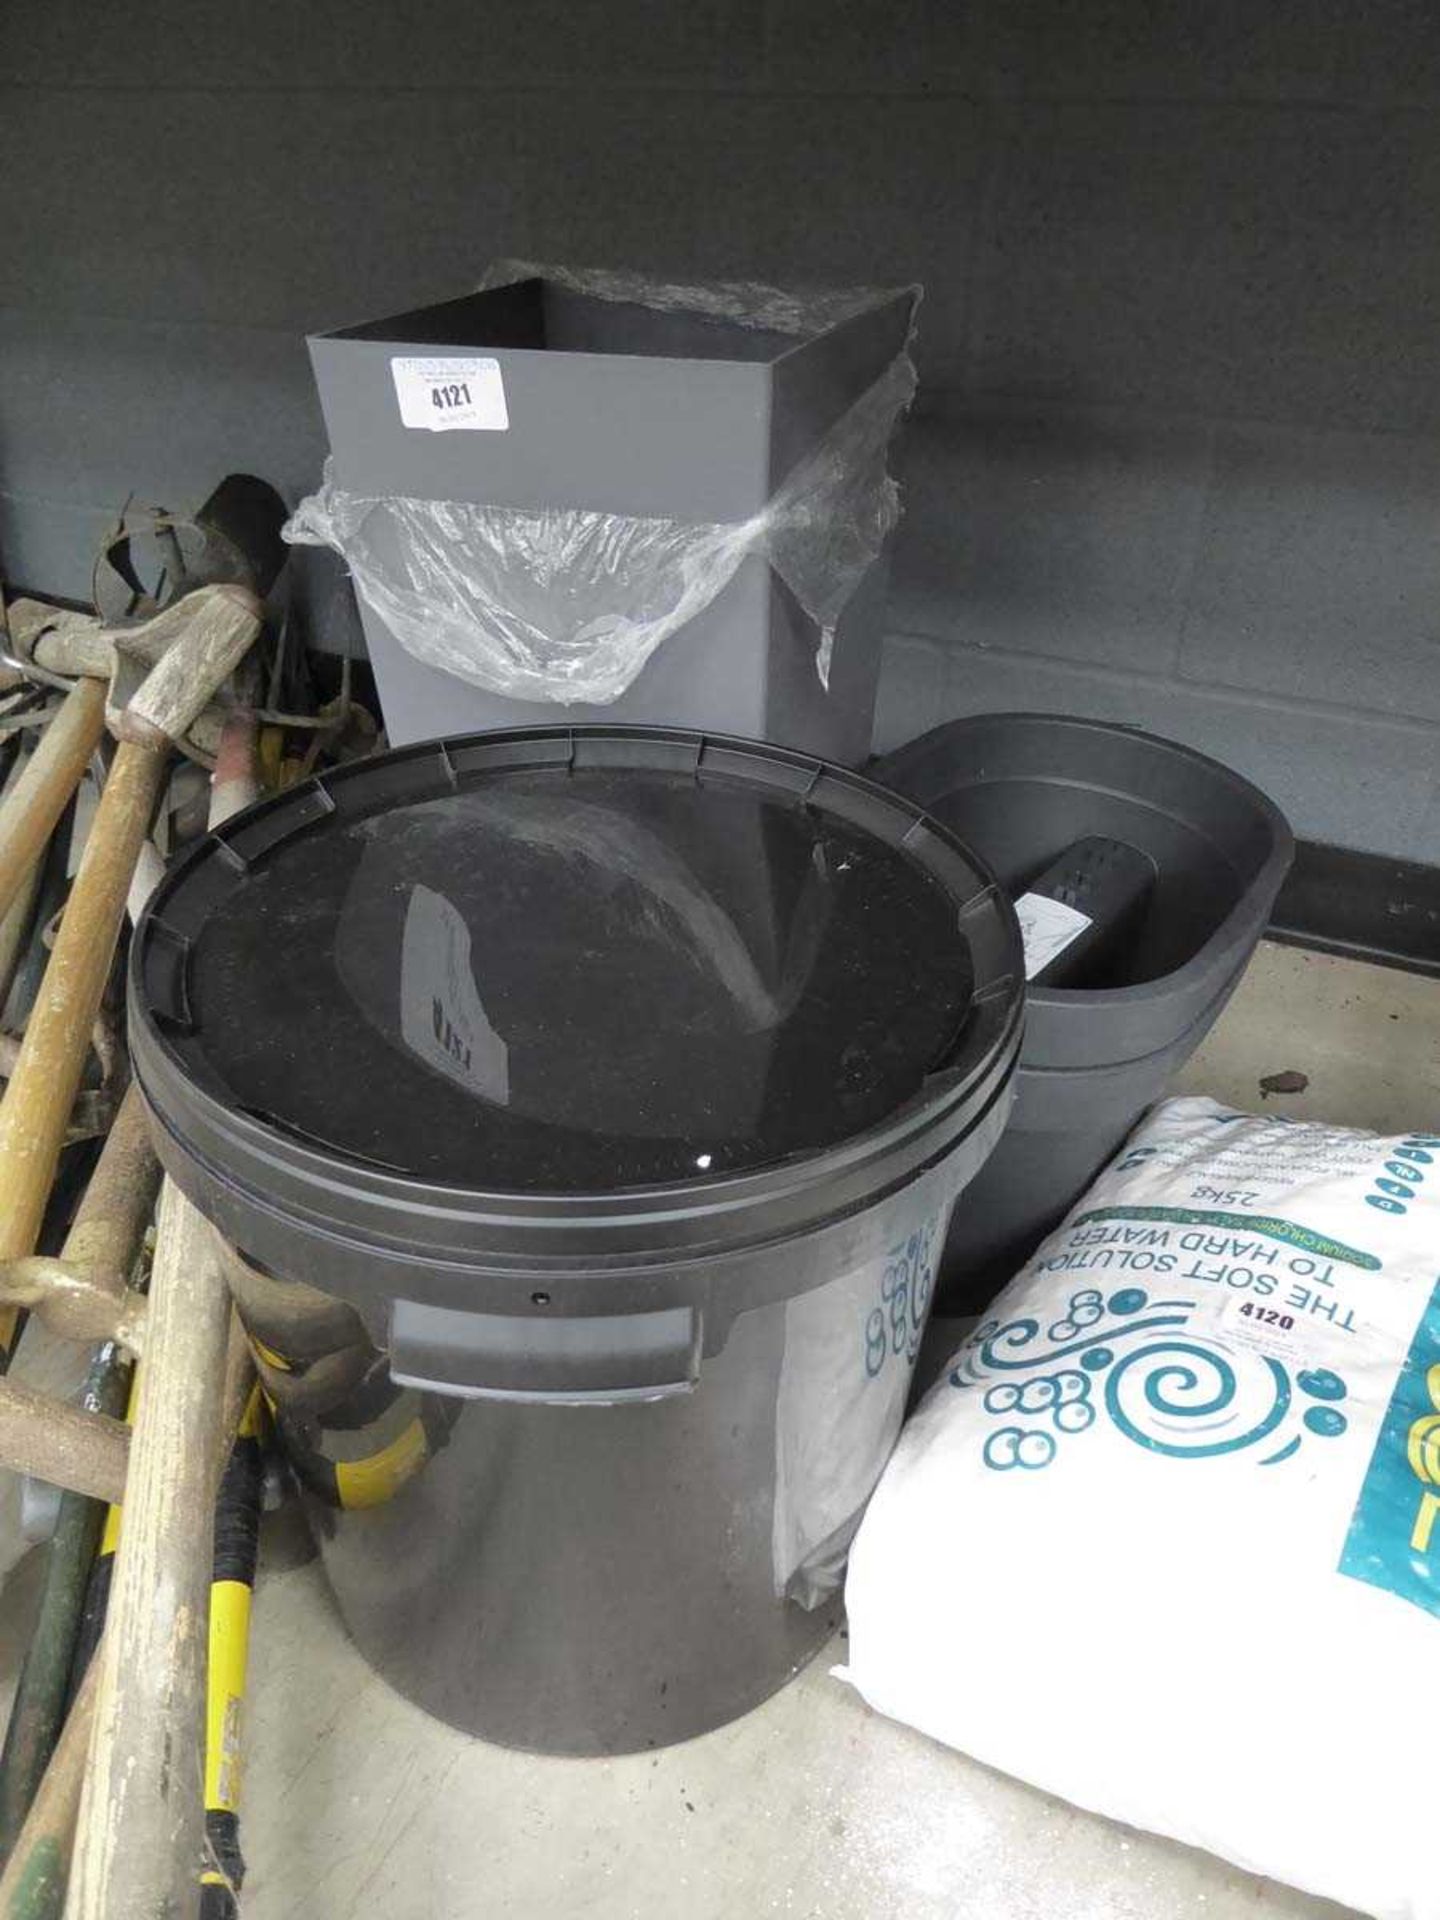 +VAT Some plant pots and a plastic bucket